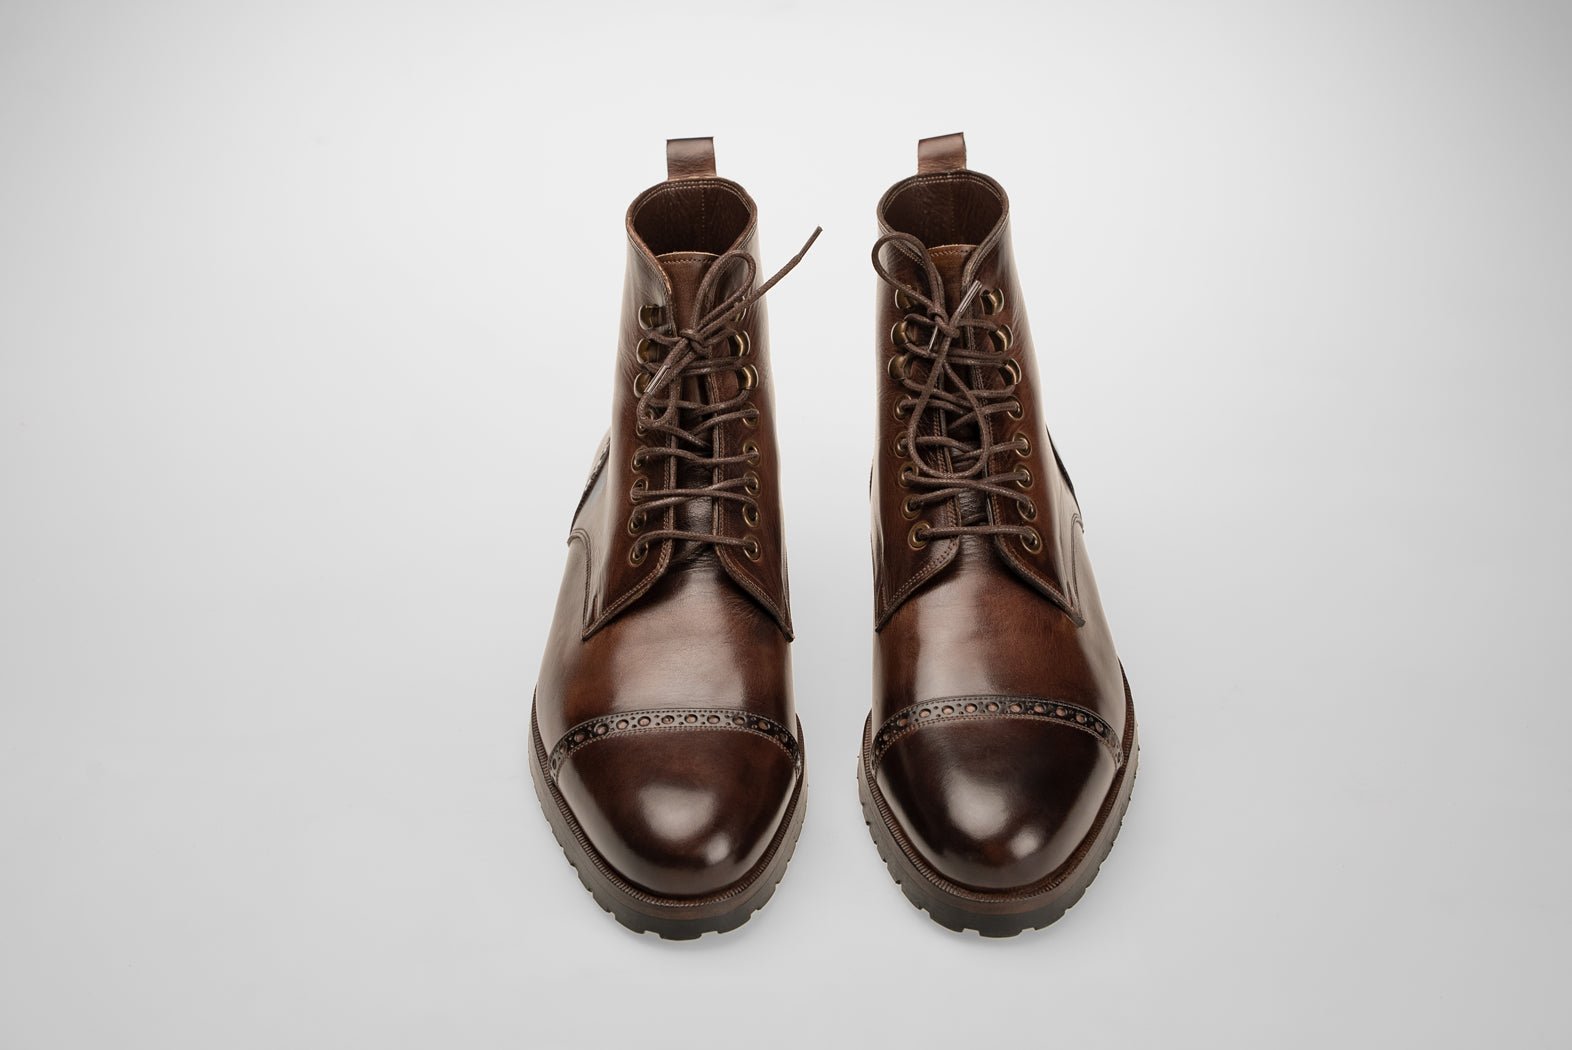 Bosphorus LeatherBosphorus Leather Boots - Harold